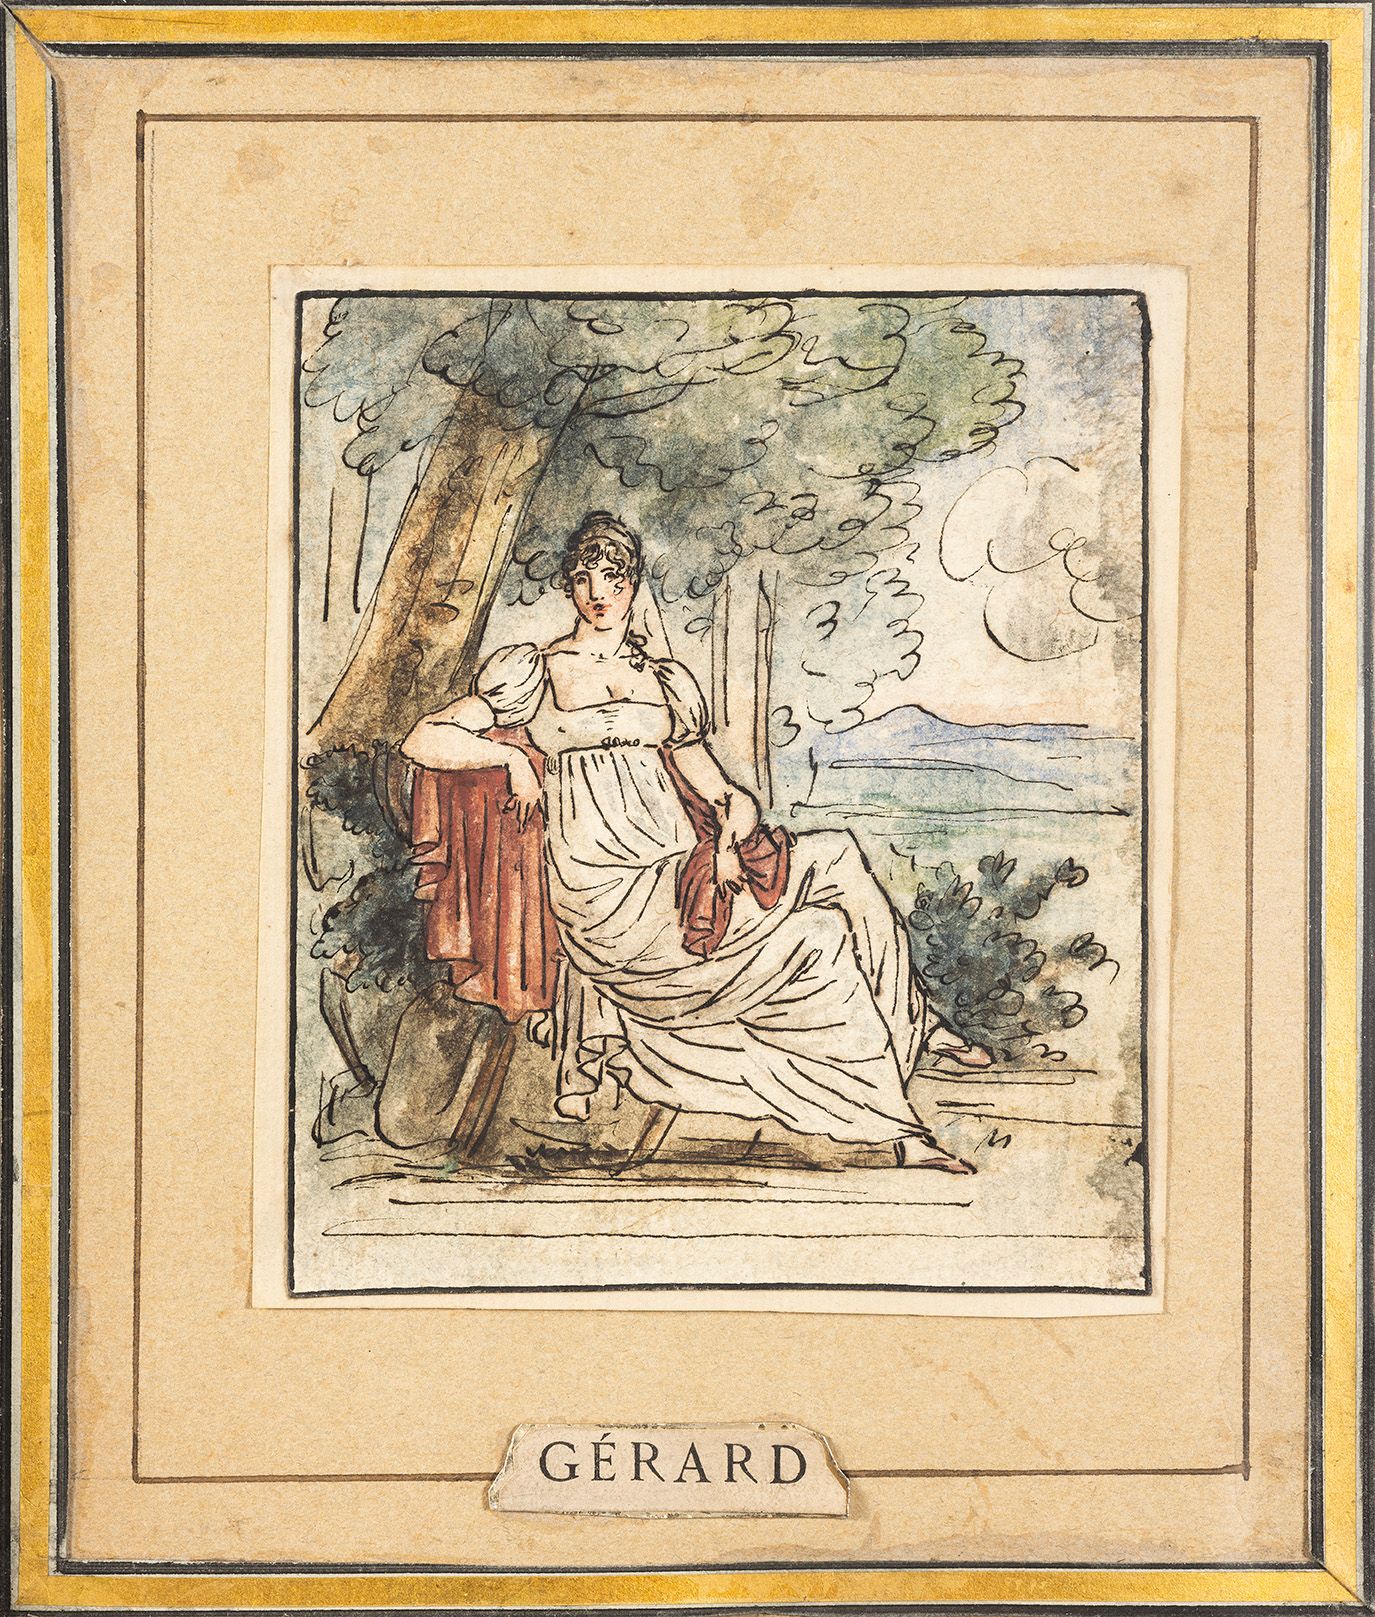 Ecole FRANCAISE vers 1800 坐在树下的女人
钢笔和棕色墨水的水彩画 11.5 x 9.8 cm
裱框上的旧题词 "Gérard"
右侧边&hellip;